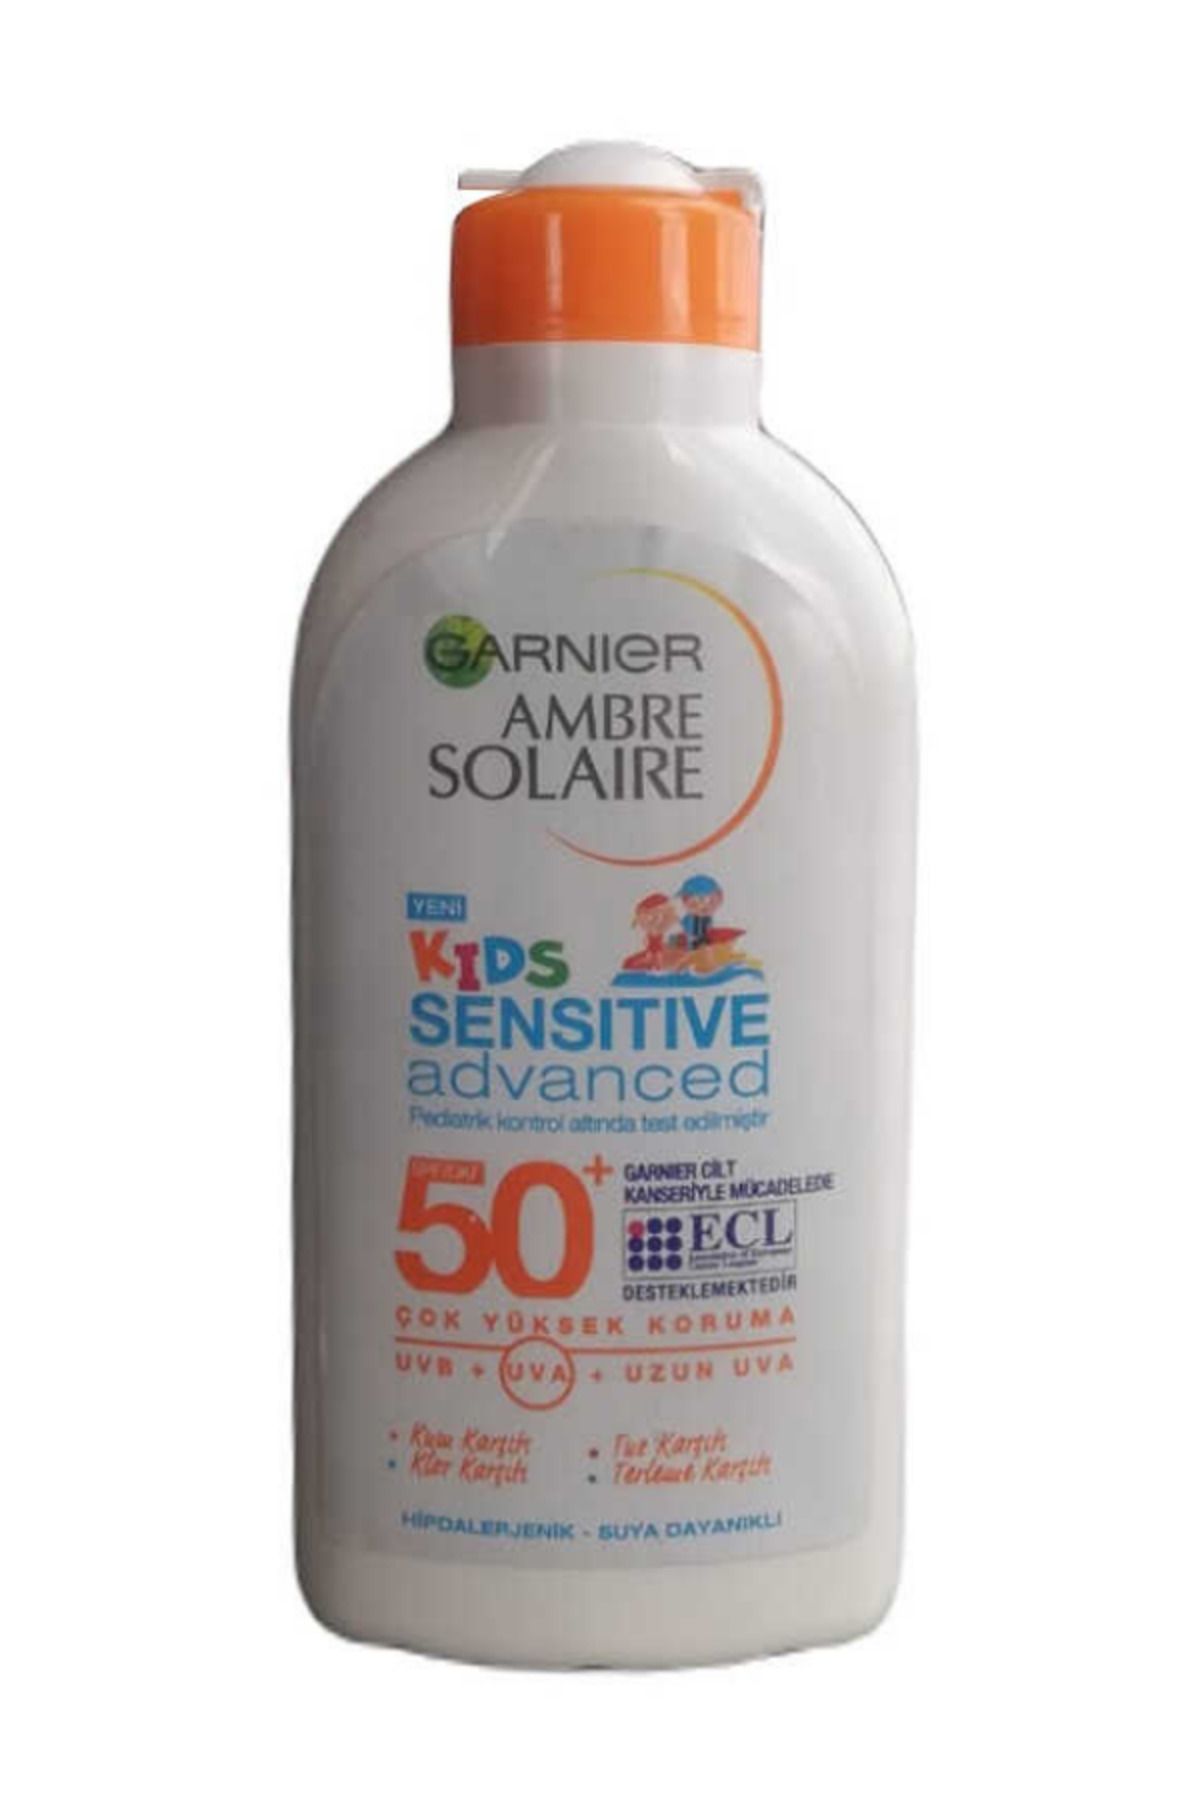 Garnier Ambre Solaire Kids Sensitive Adveanced Çocuk Krem GKF50+ 200 ml